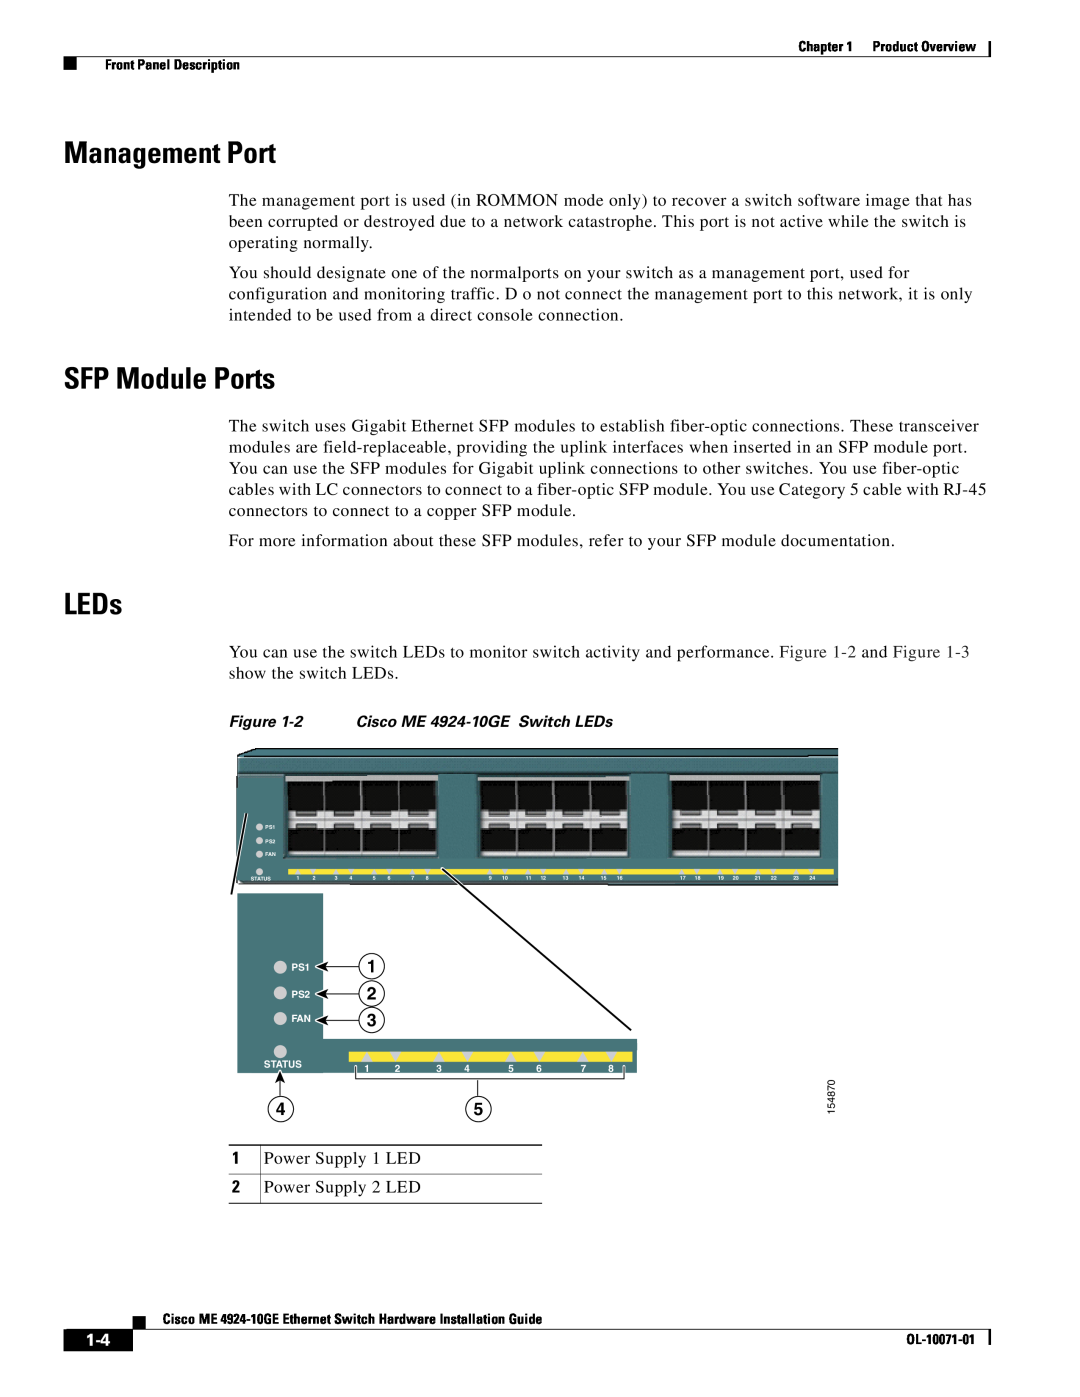 Cisco Systems ME 4924-10GE manual Management Port, SFP Module Ports, LEDs 